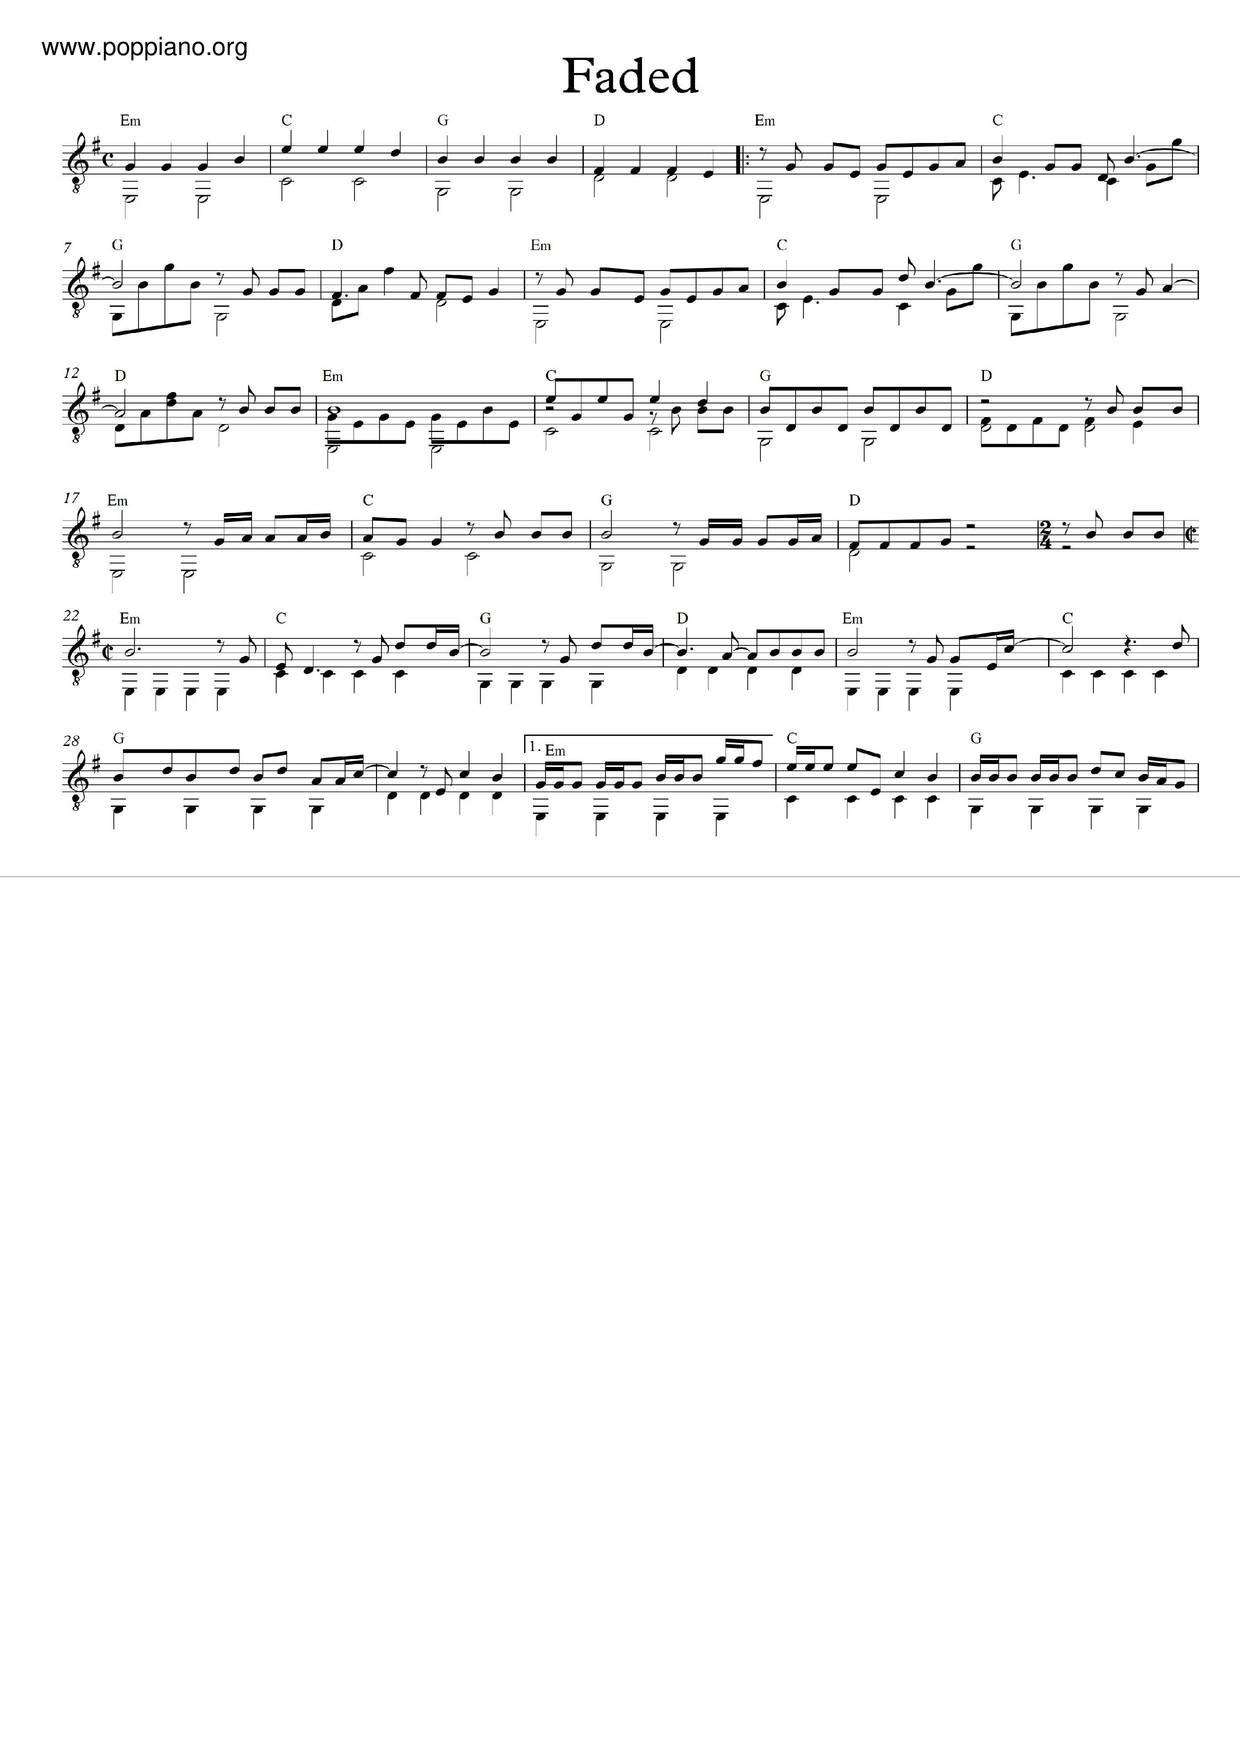 Alan Walker Faded Violin Score Pdf アラン ウォーカー Free Score Download